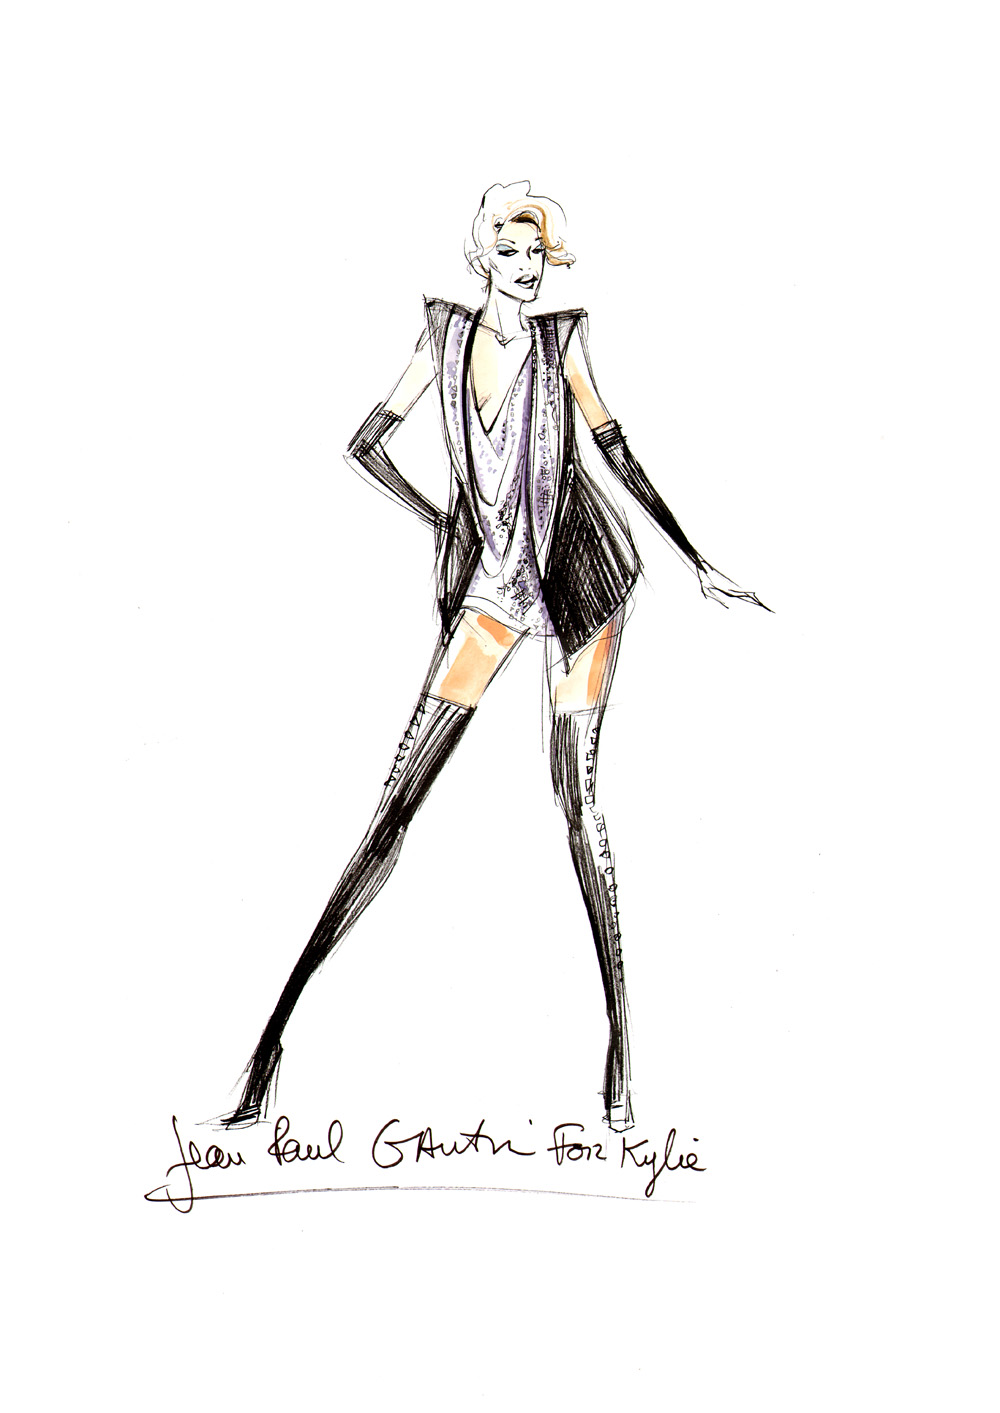 Jean Paul Gaultier Designs Kylie Minogue’s Wardrobe for her First U.S. Tour